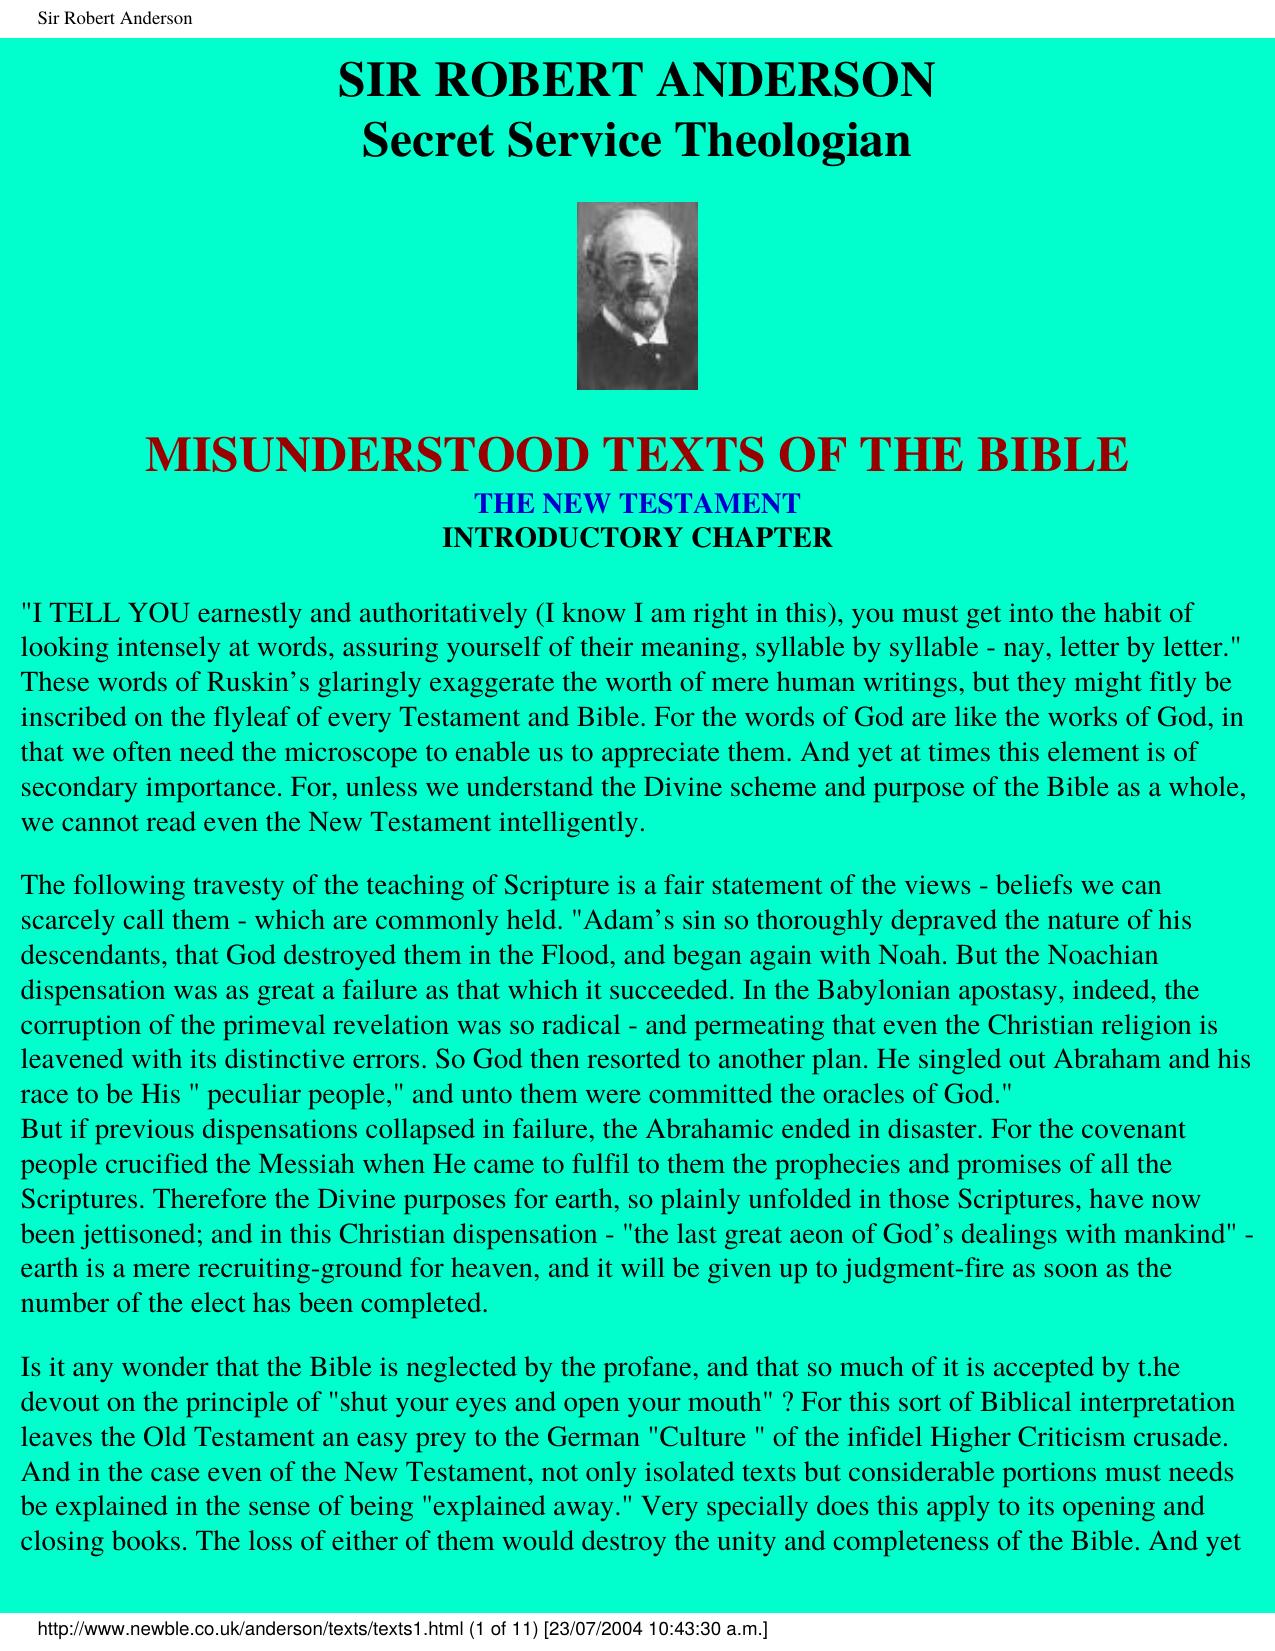 Misunderstood Texts of Scripture - Sir Robert Anderson by Sir Robert Anderson